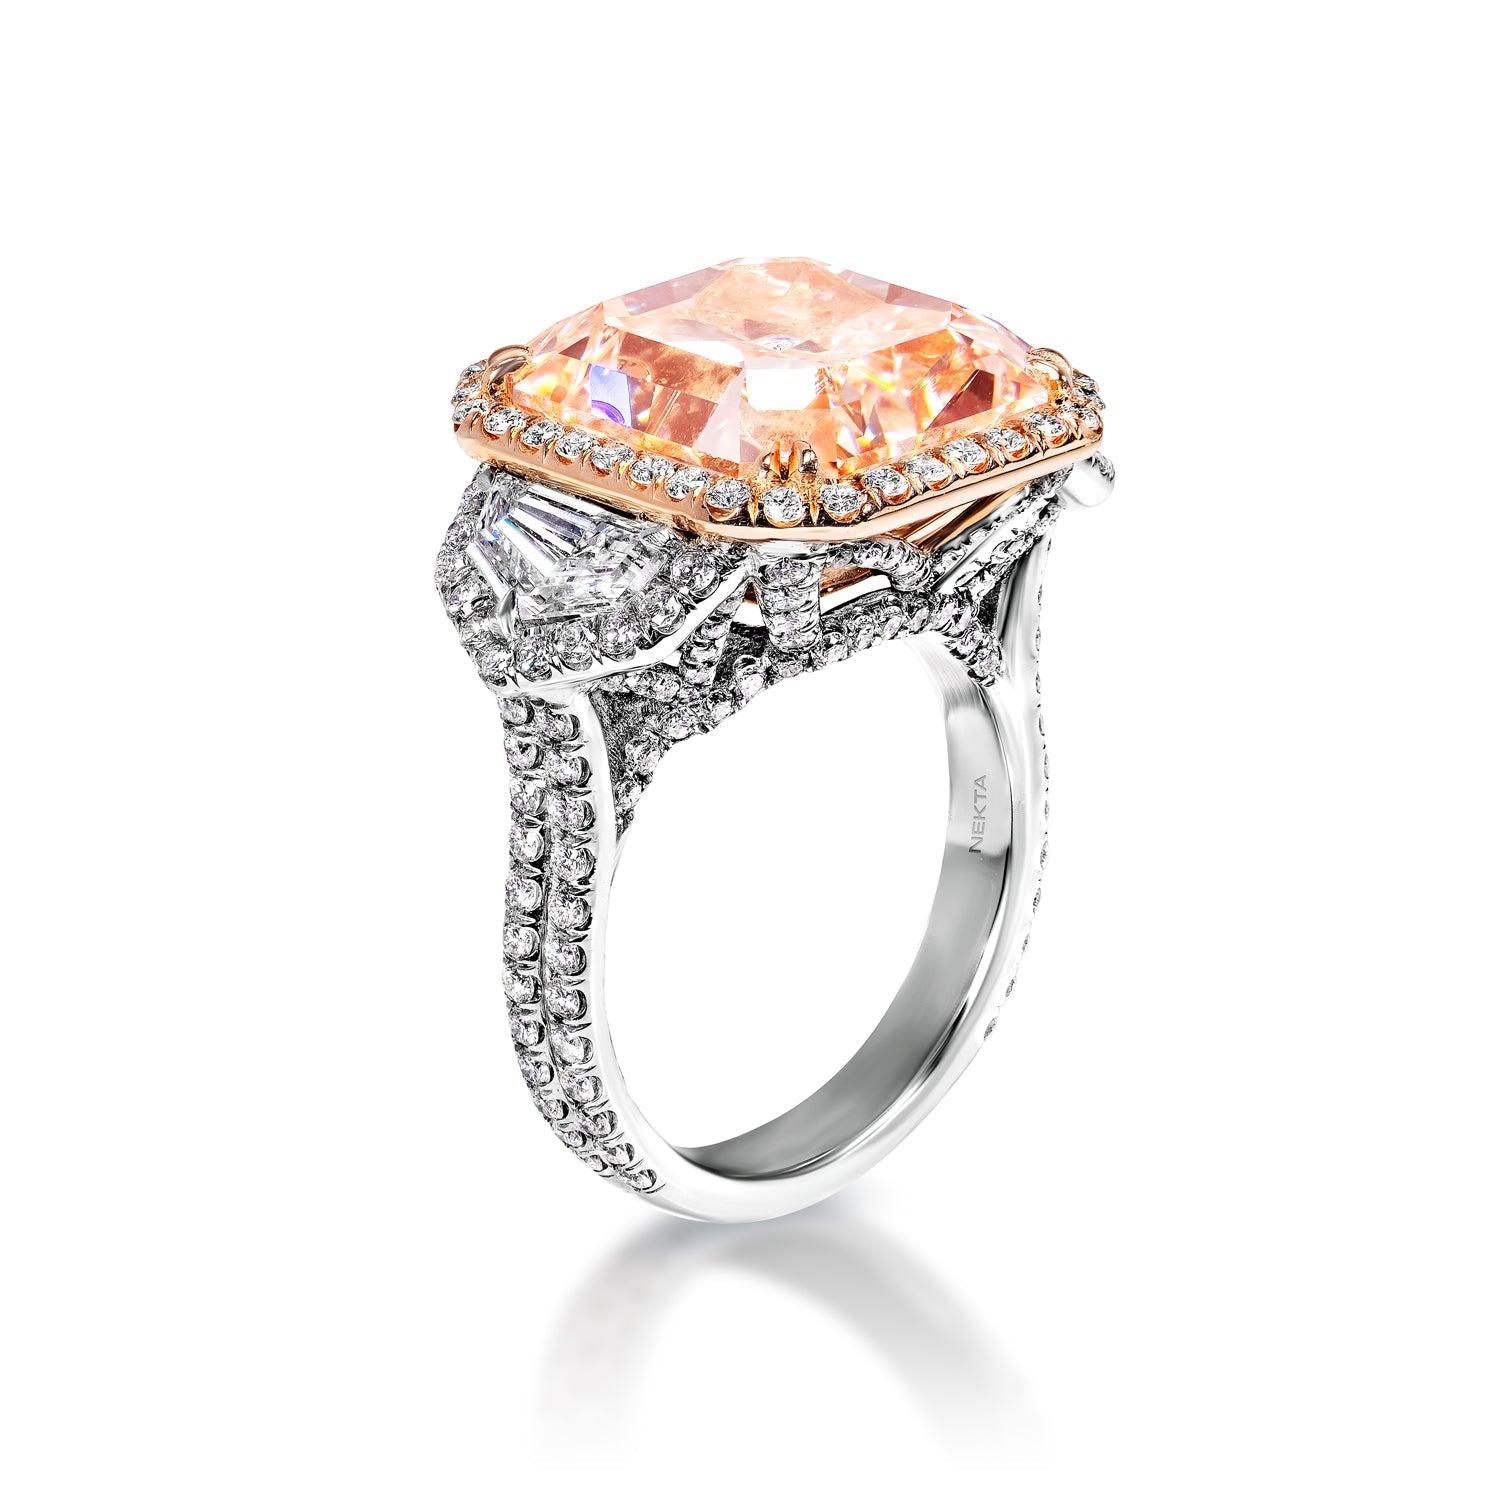 15 carat diamond ring